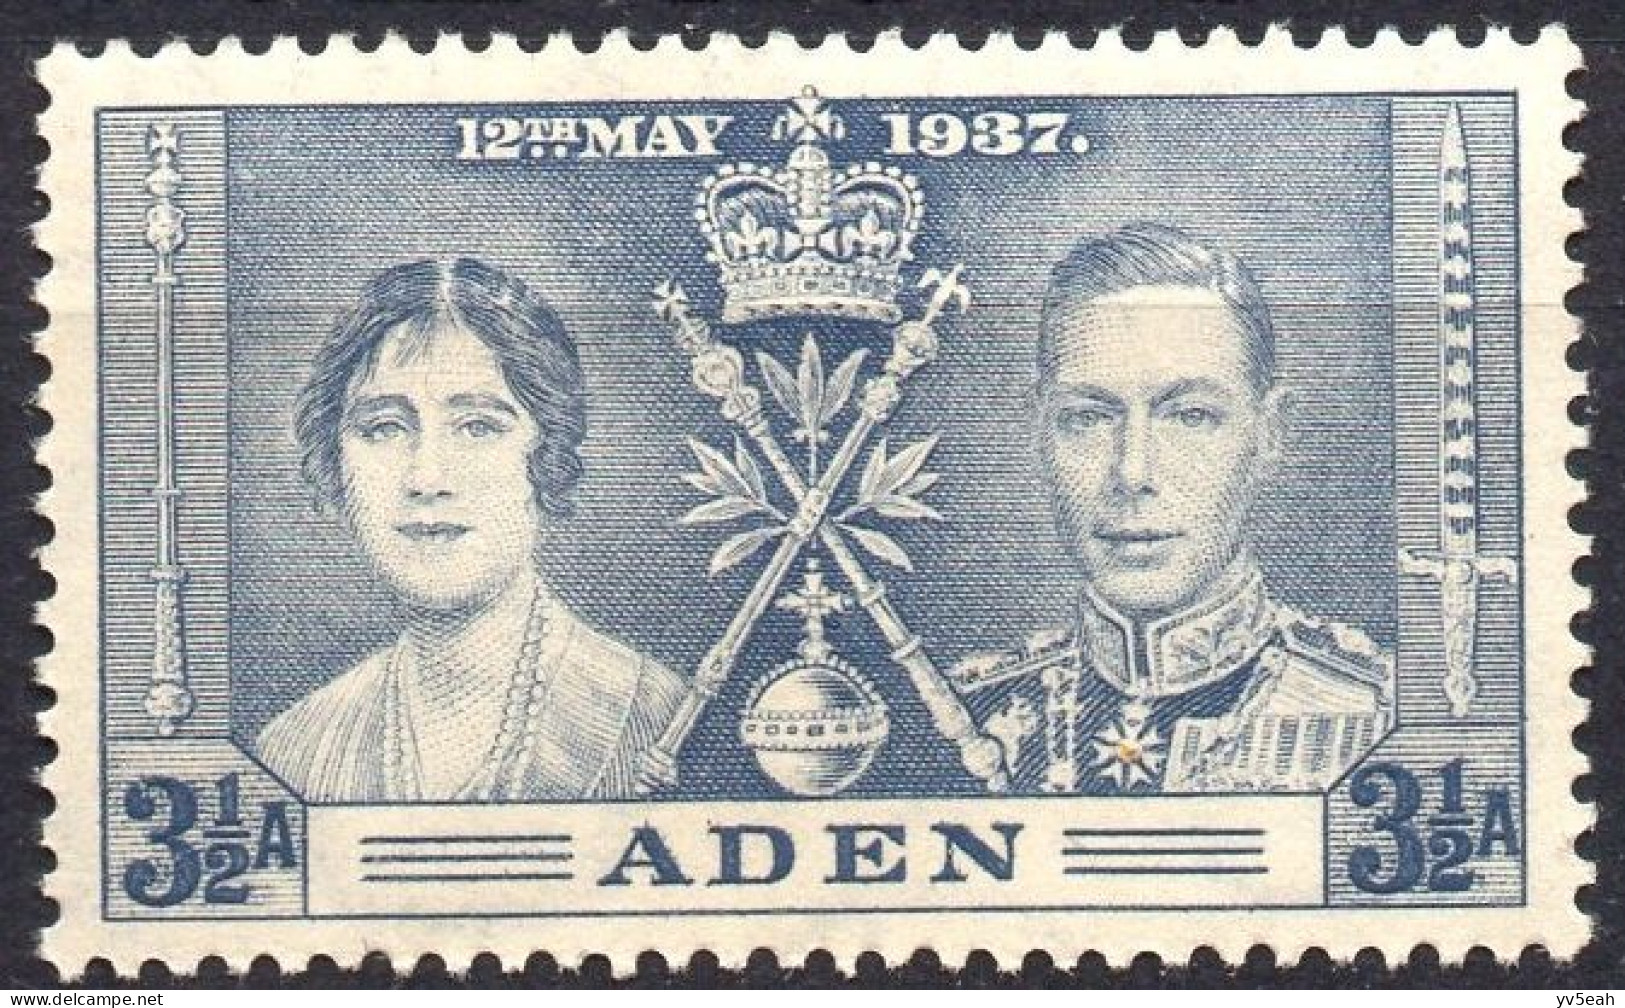 ADEN/1937/MNH/SC#15/KING GEORGE VI /KGVI / CORONATION ISSUE / 3 1/2p GRAY BLUE - Aden (1854-1963)